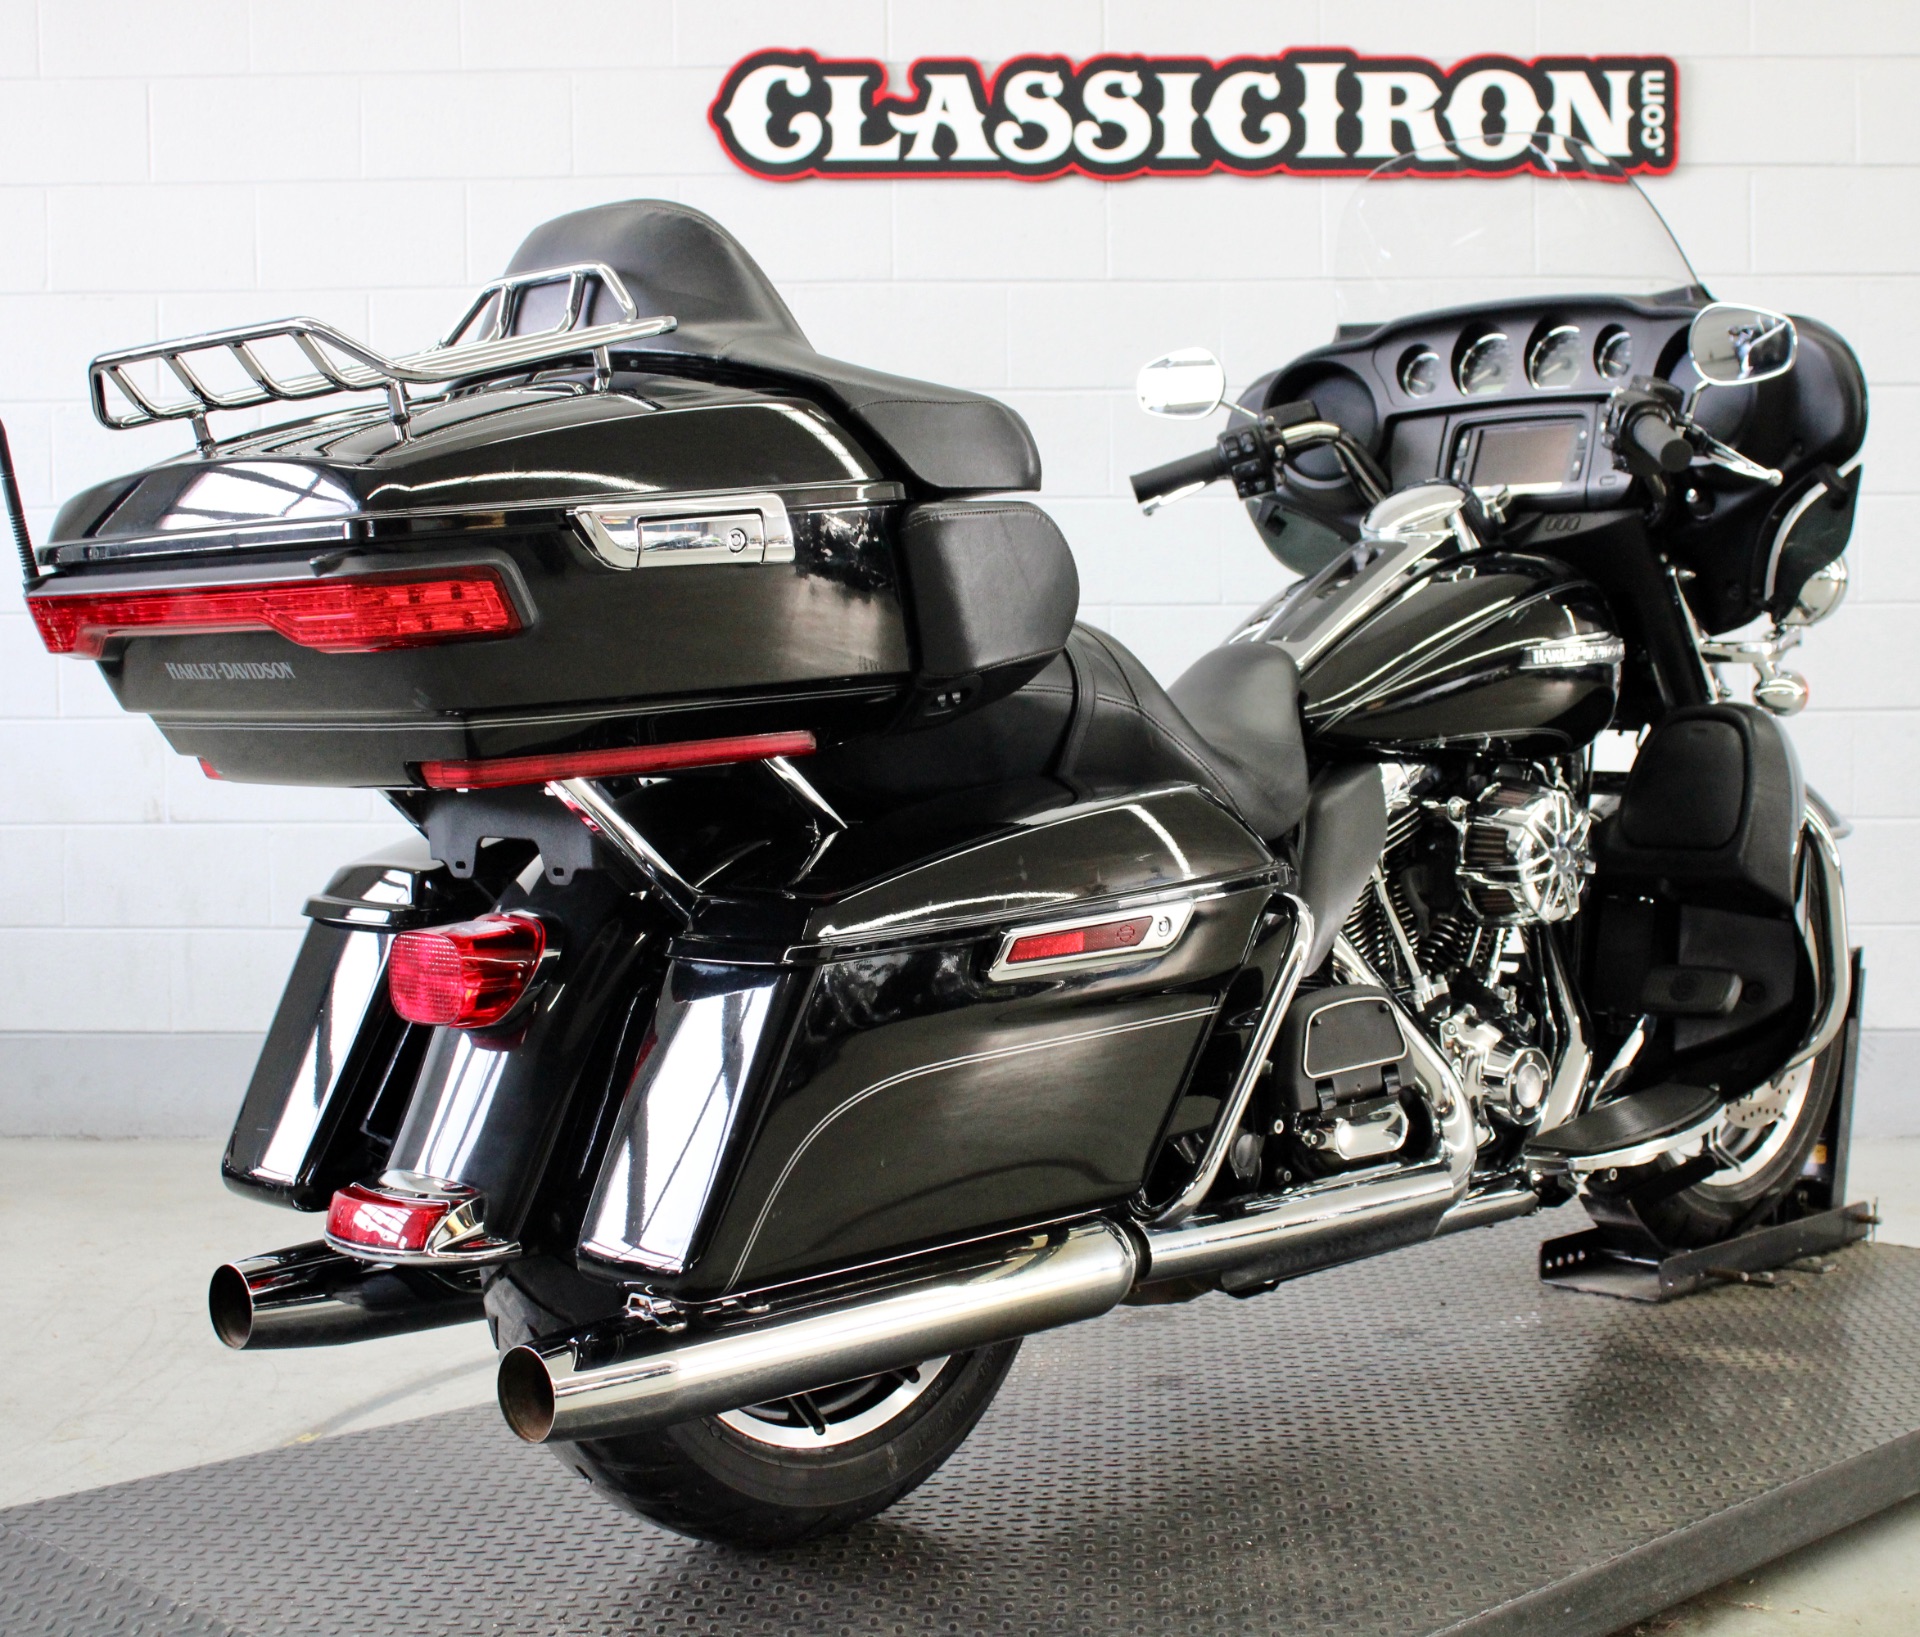 2014 Harley-Davidson Electra Glide® Ultra Classic® in Fredericksburg, Virginia - Photo 5